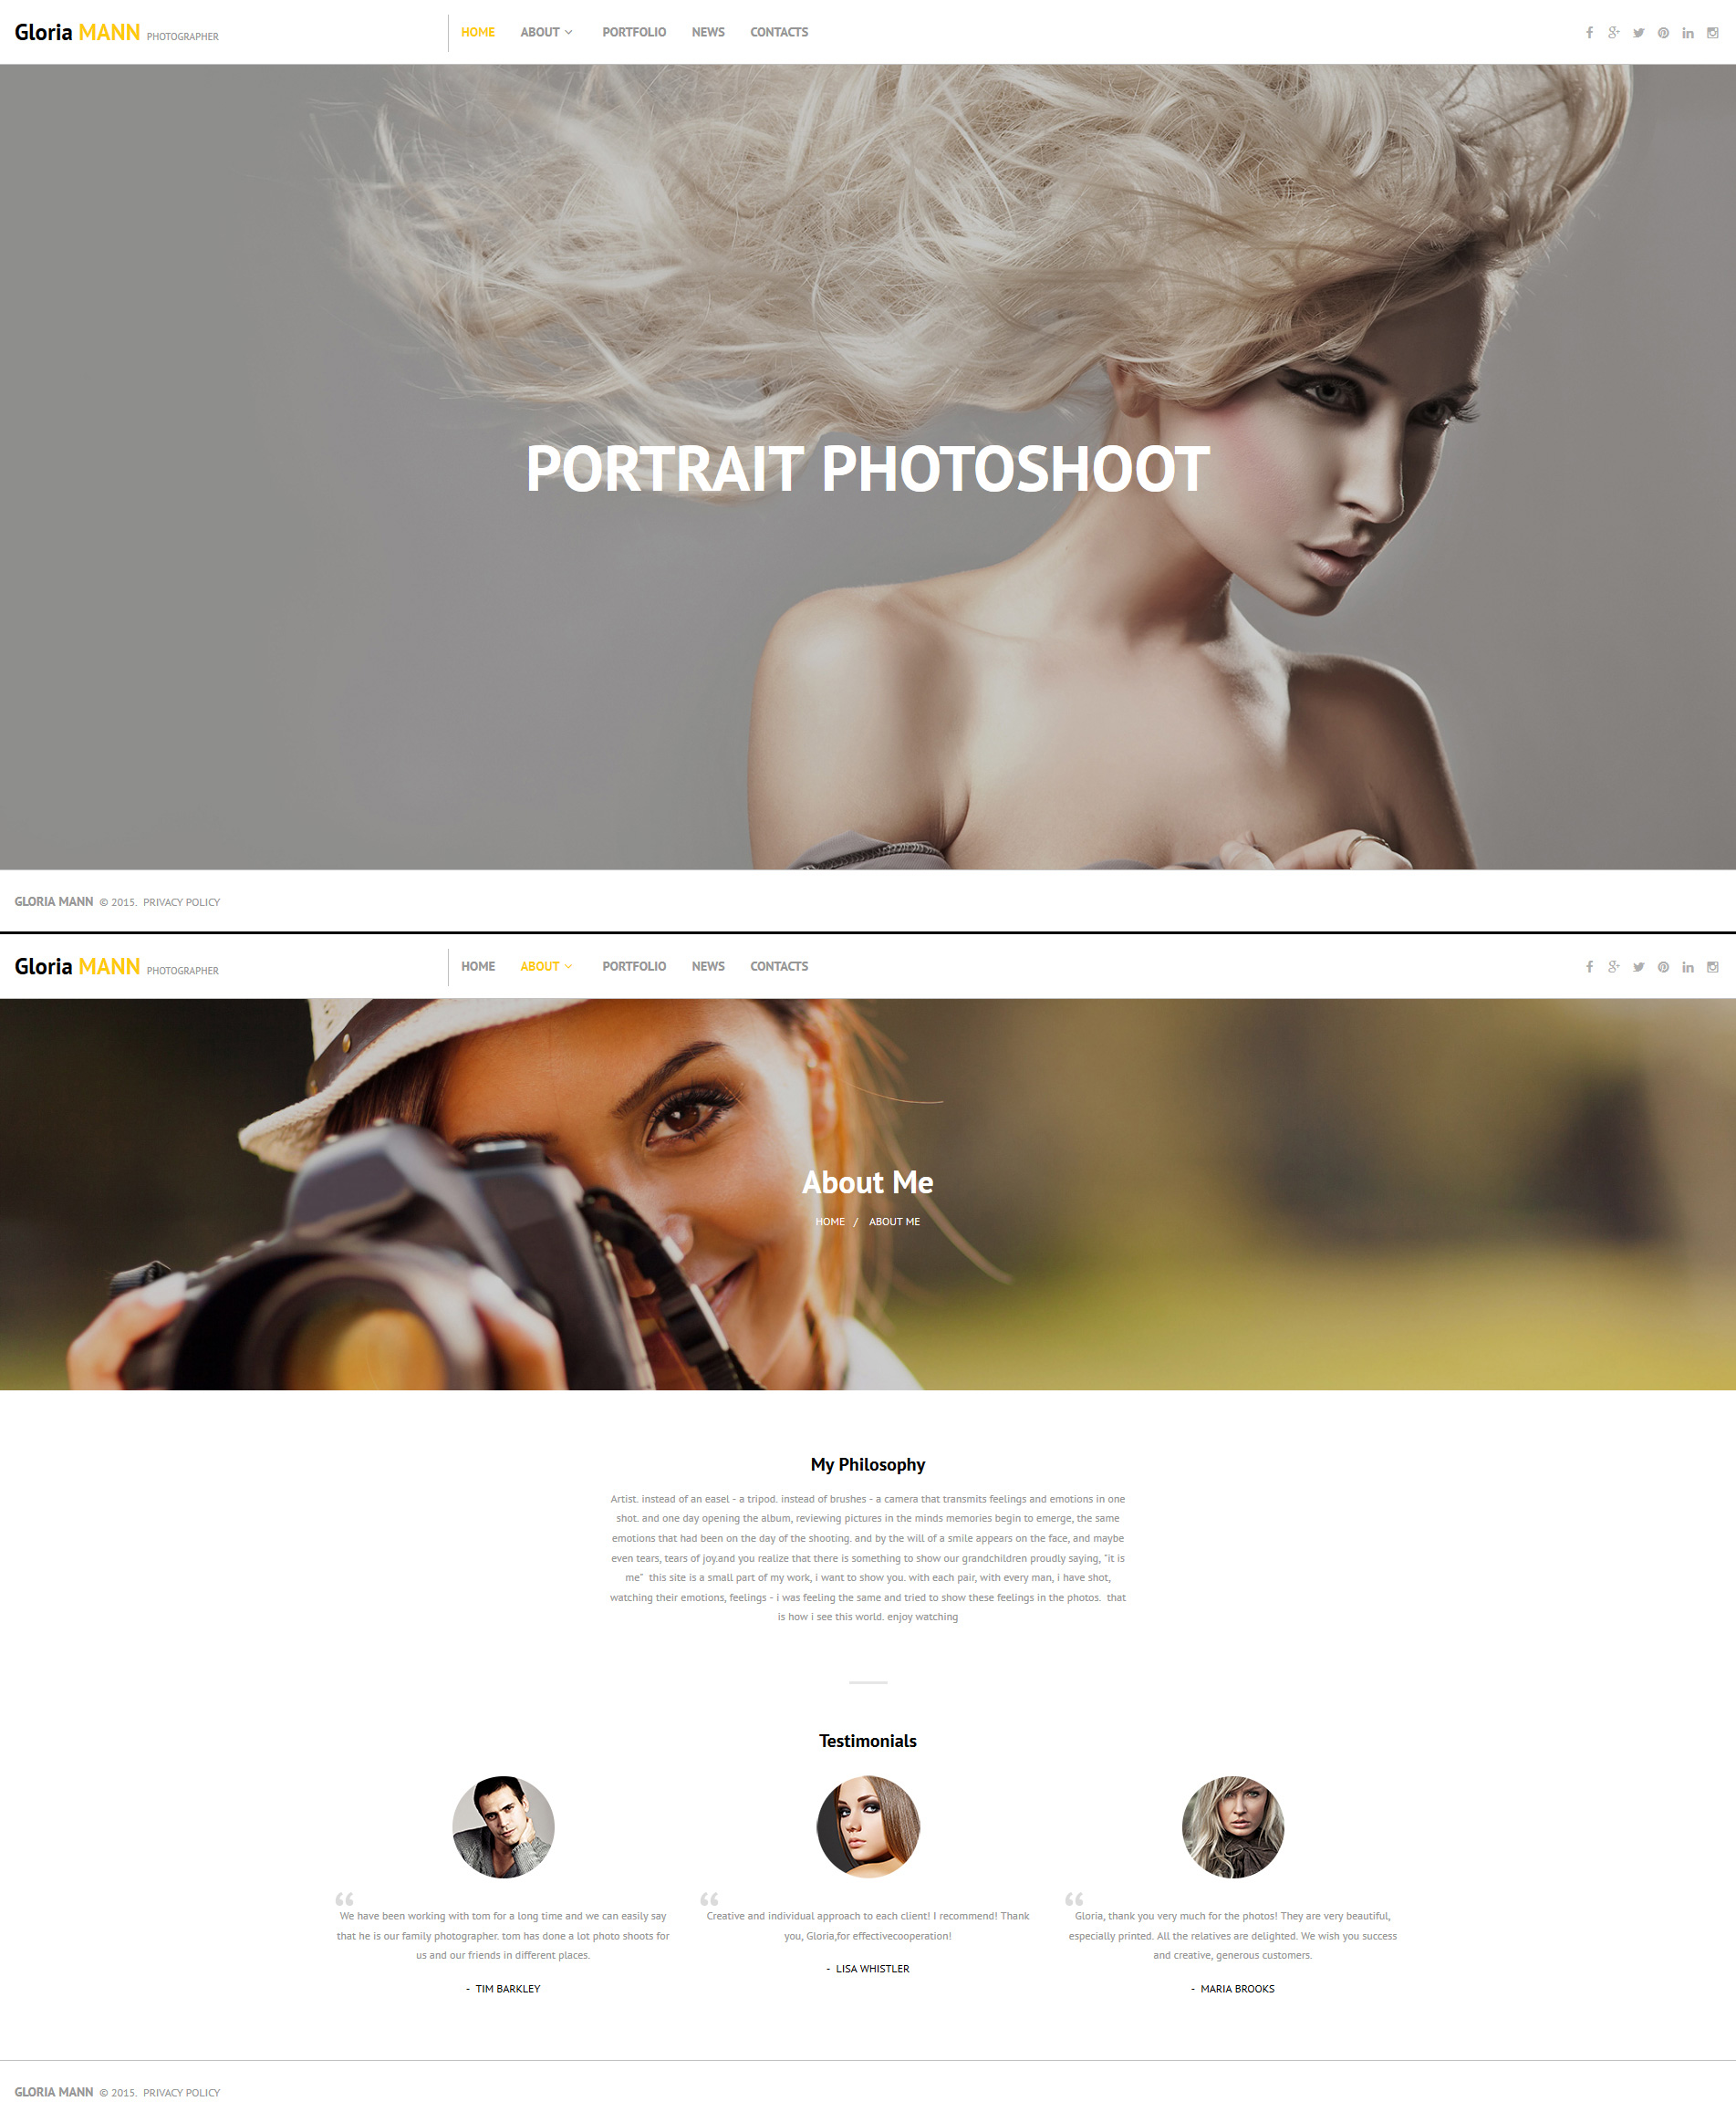 Photo Portfolio Design Powered by MotoCMS 3 Website Builder